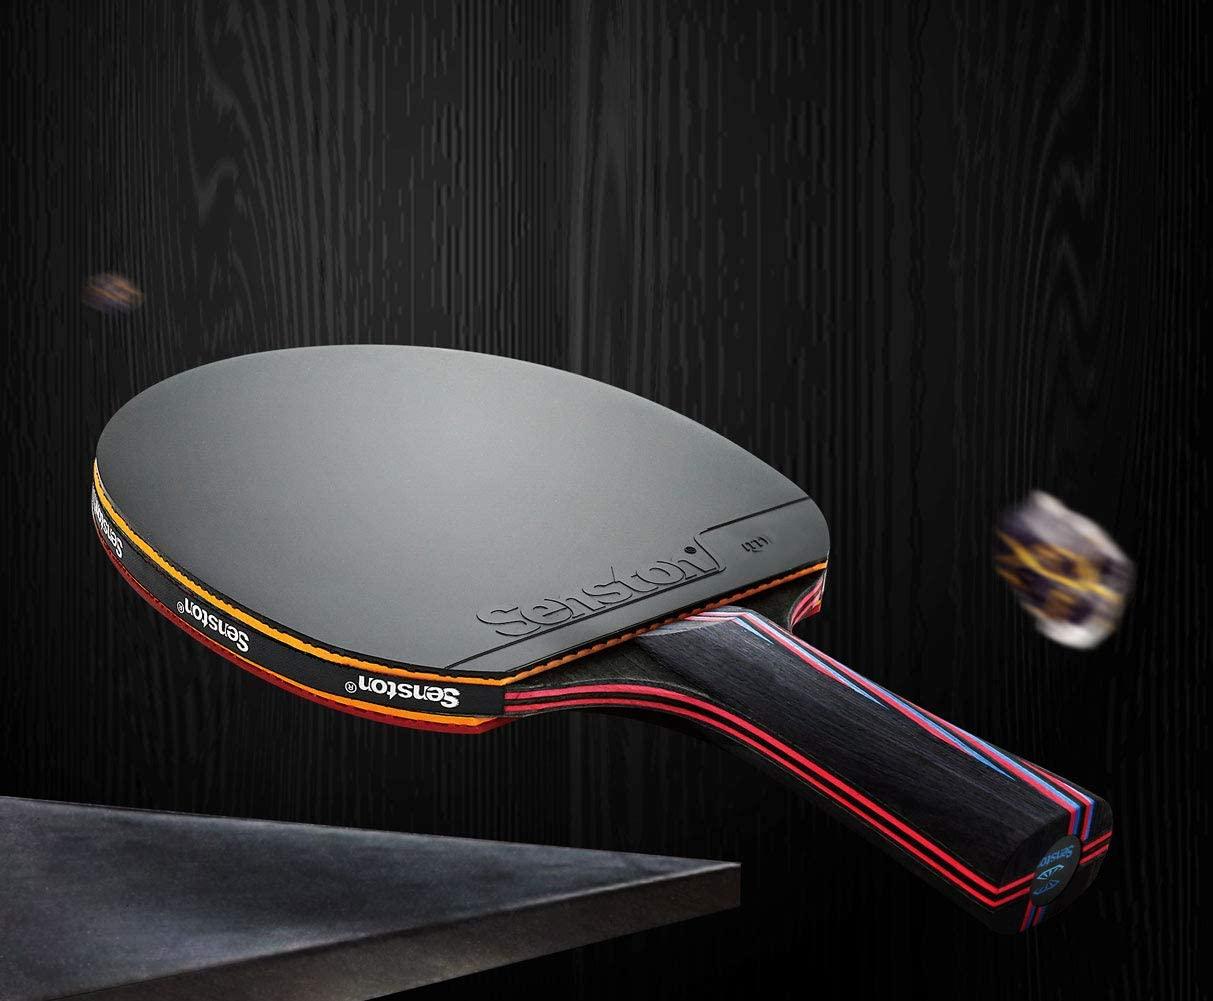 Senston Table Tennis Rackets Set, Professional Table Tennis Racket